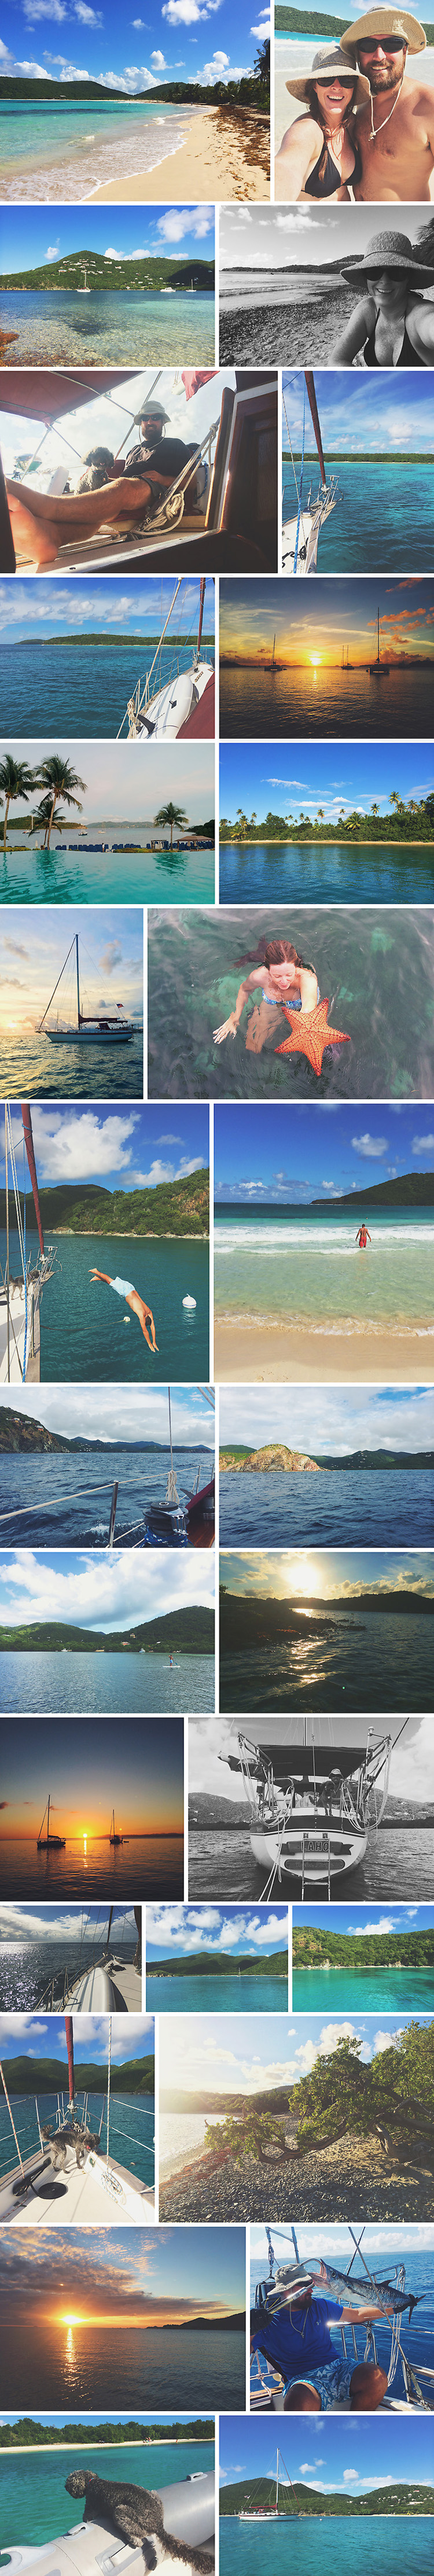 Sailing-Blog-Cruising-Caribbean-Virgin-Islands-LAHOWIND-Life-Lately-iPhone-Photos-Young-Couple-Boat-Dog-Sailboat-December-2014